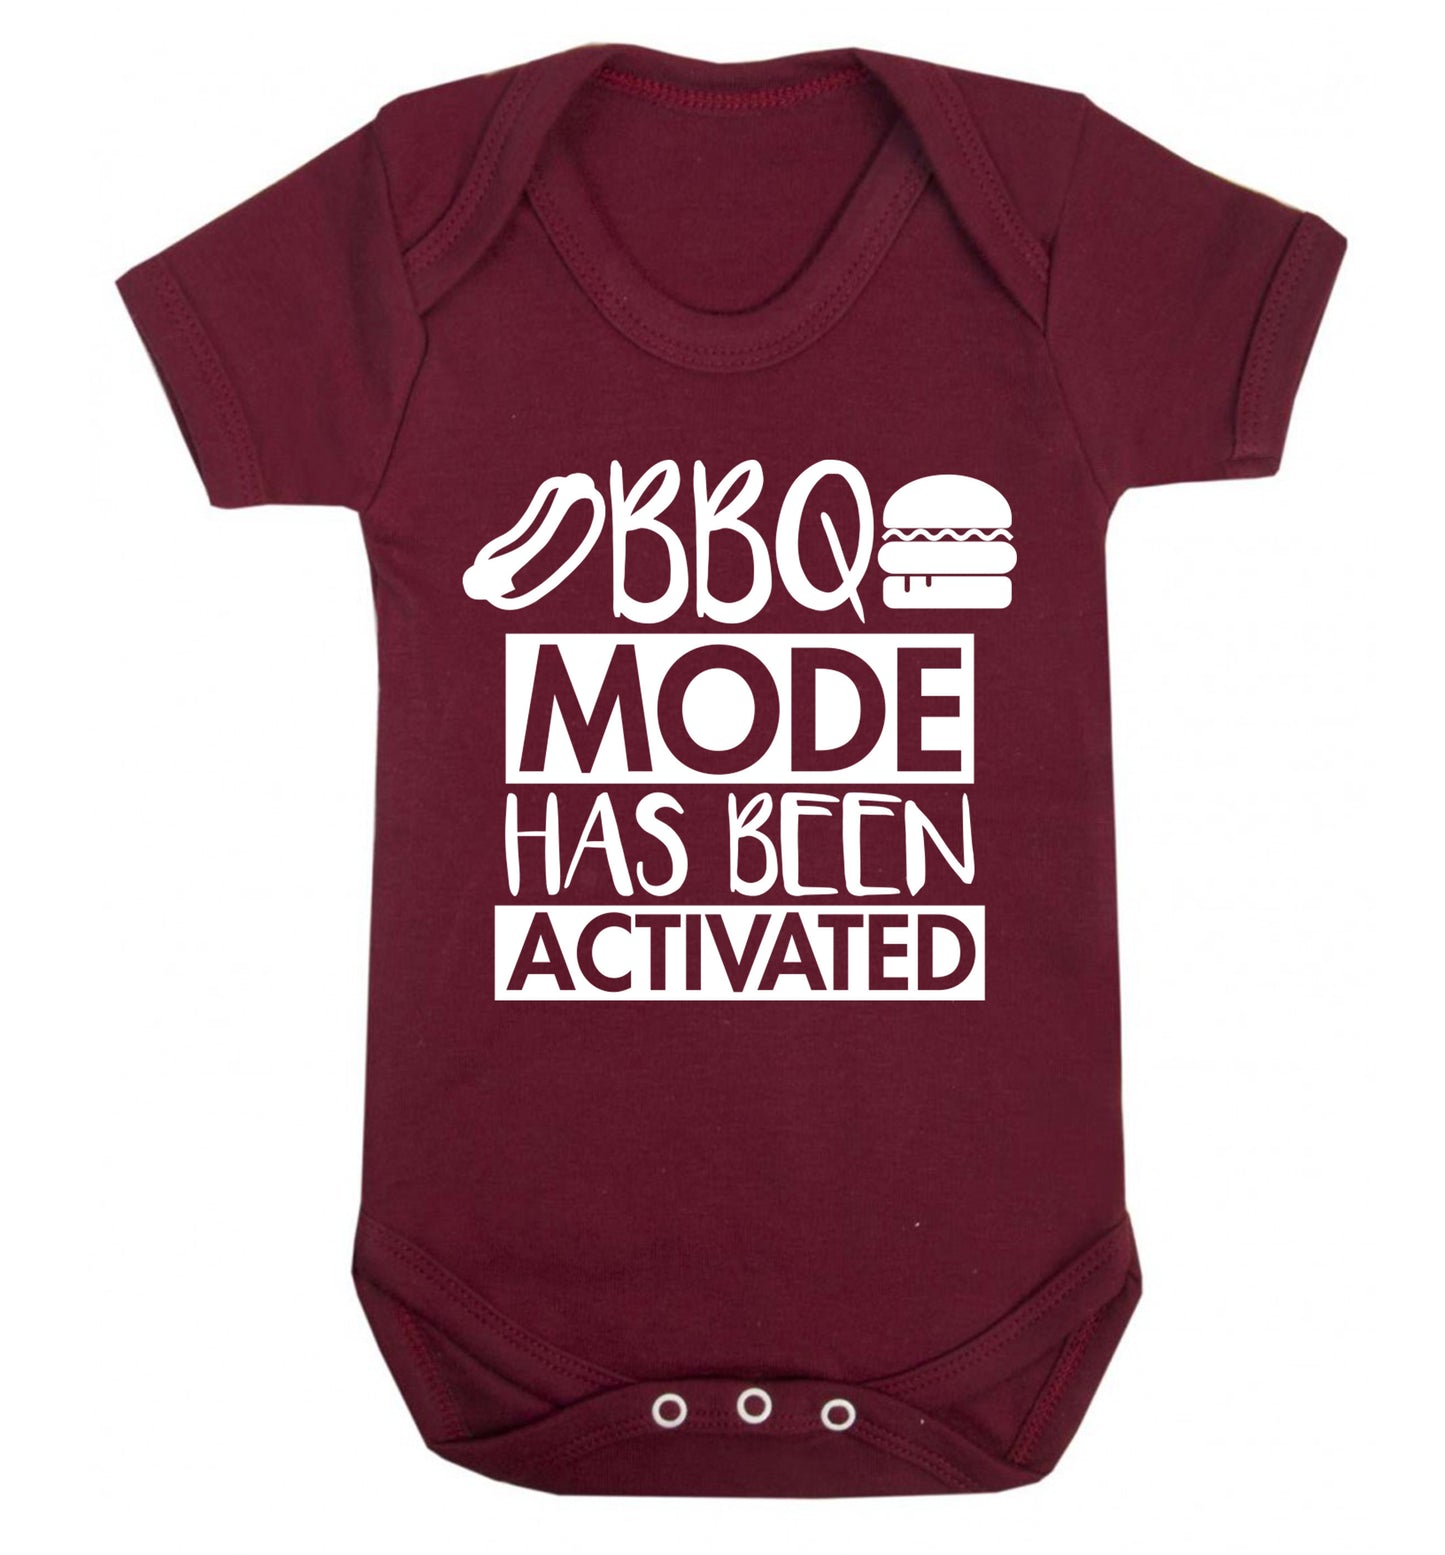 Bbq mode has been activated Baby Vest maroon 18-24 months